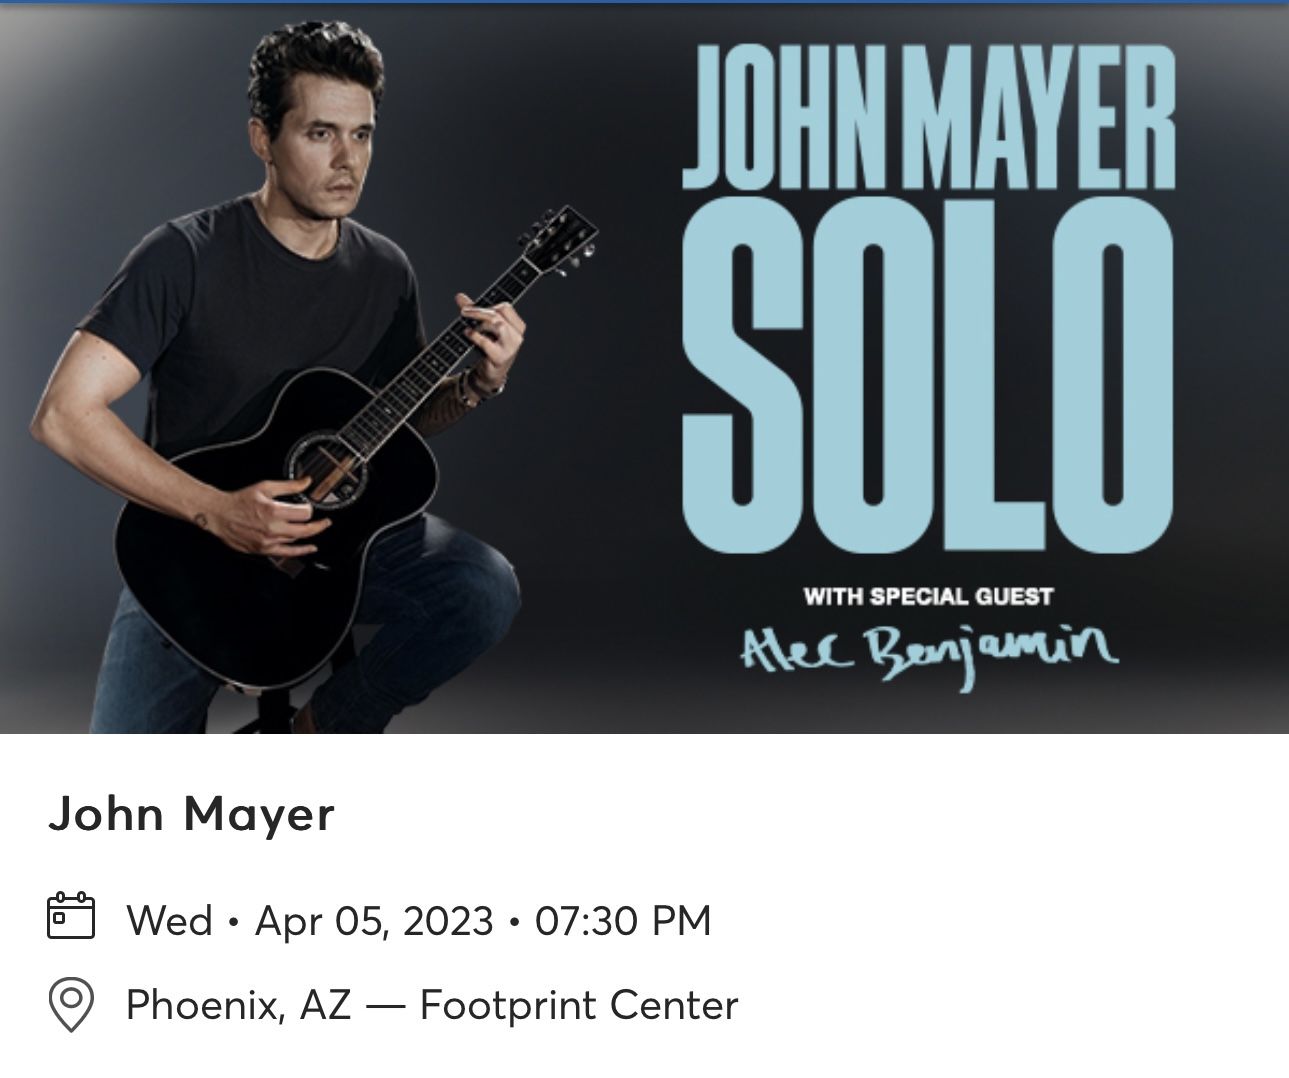 John Mayer Tickets $350